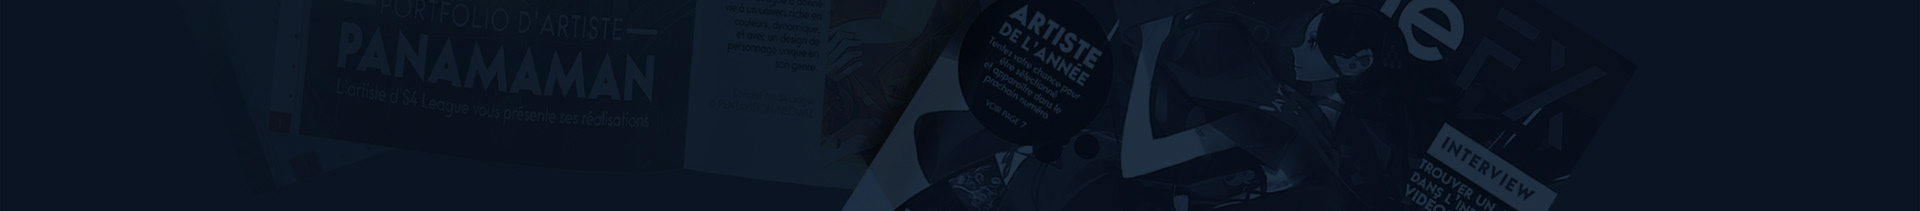 Alexandre DESIRE's profile banner